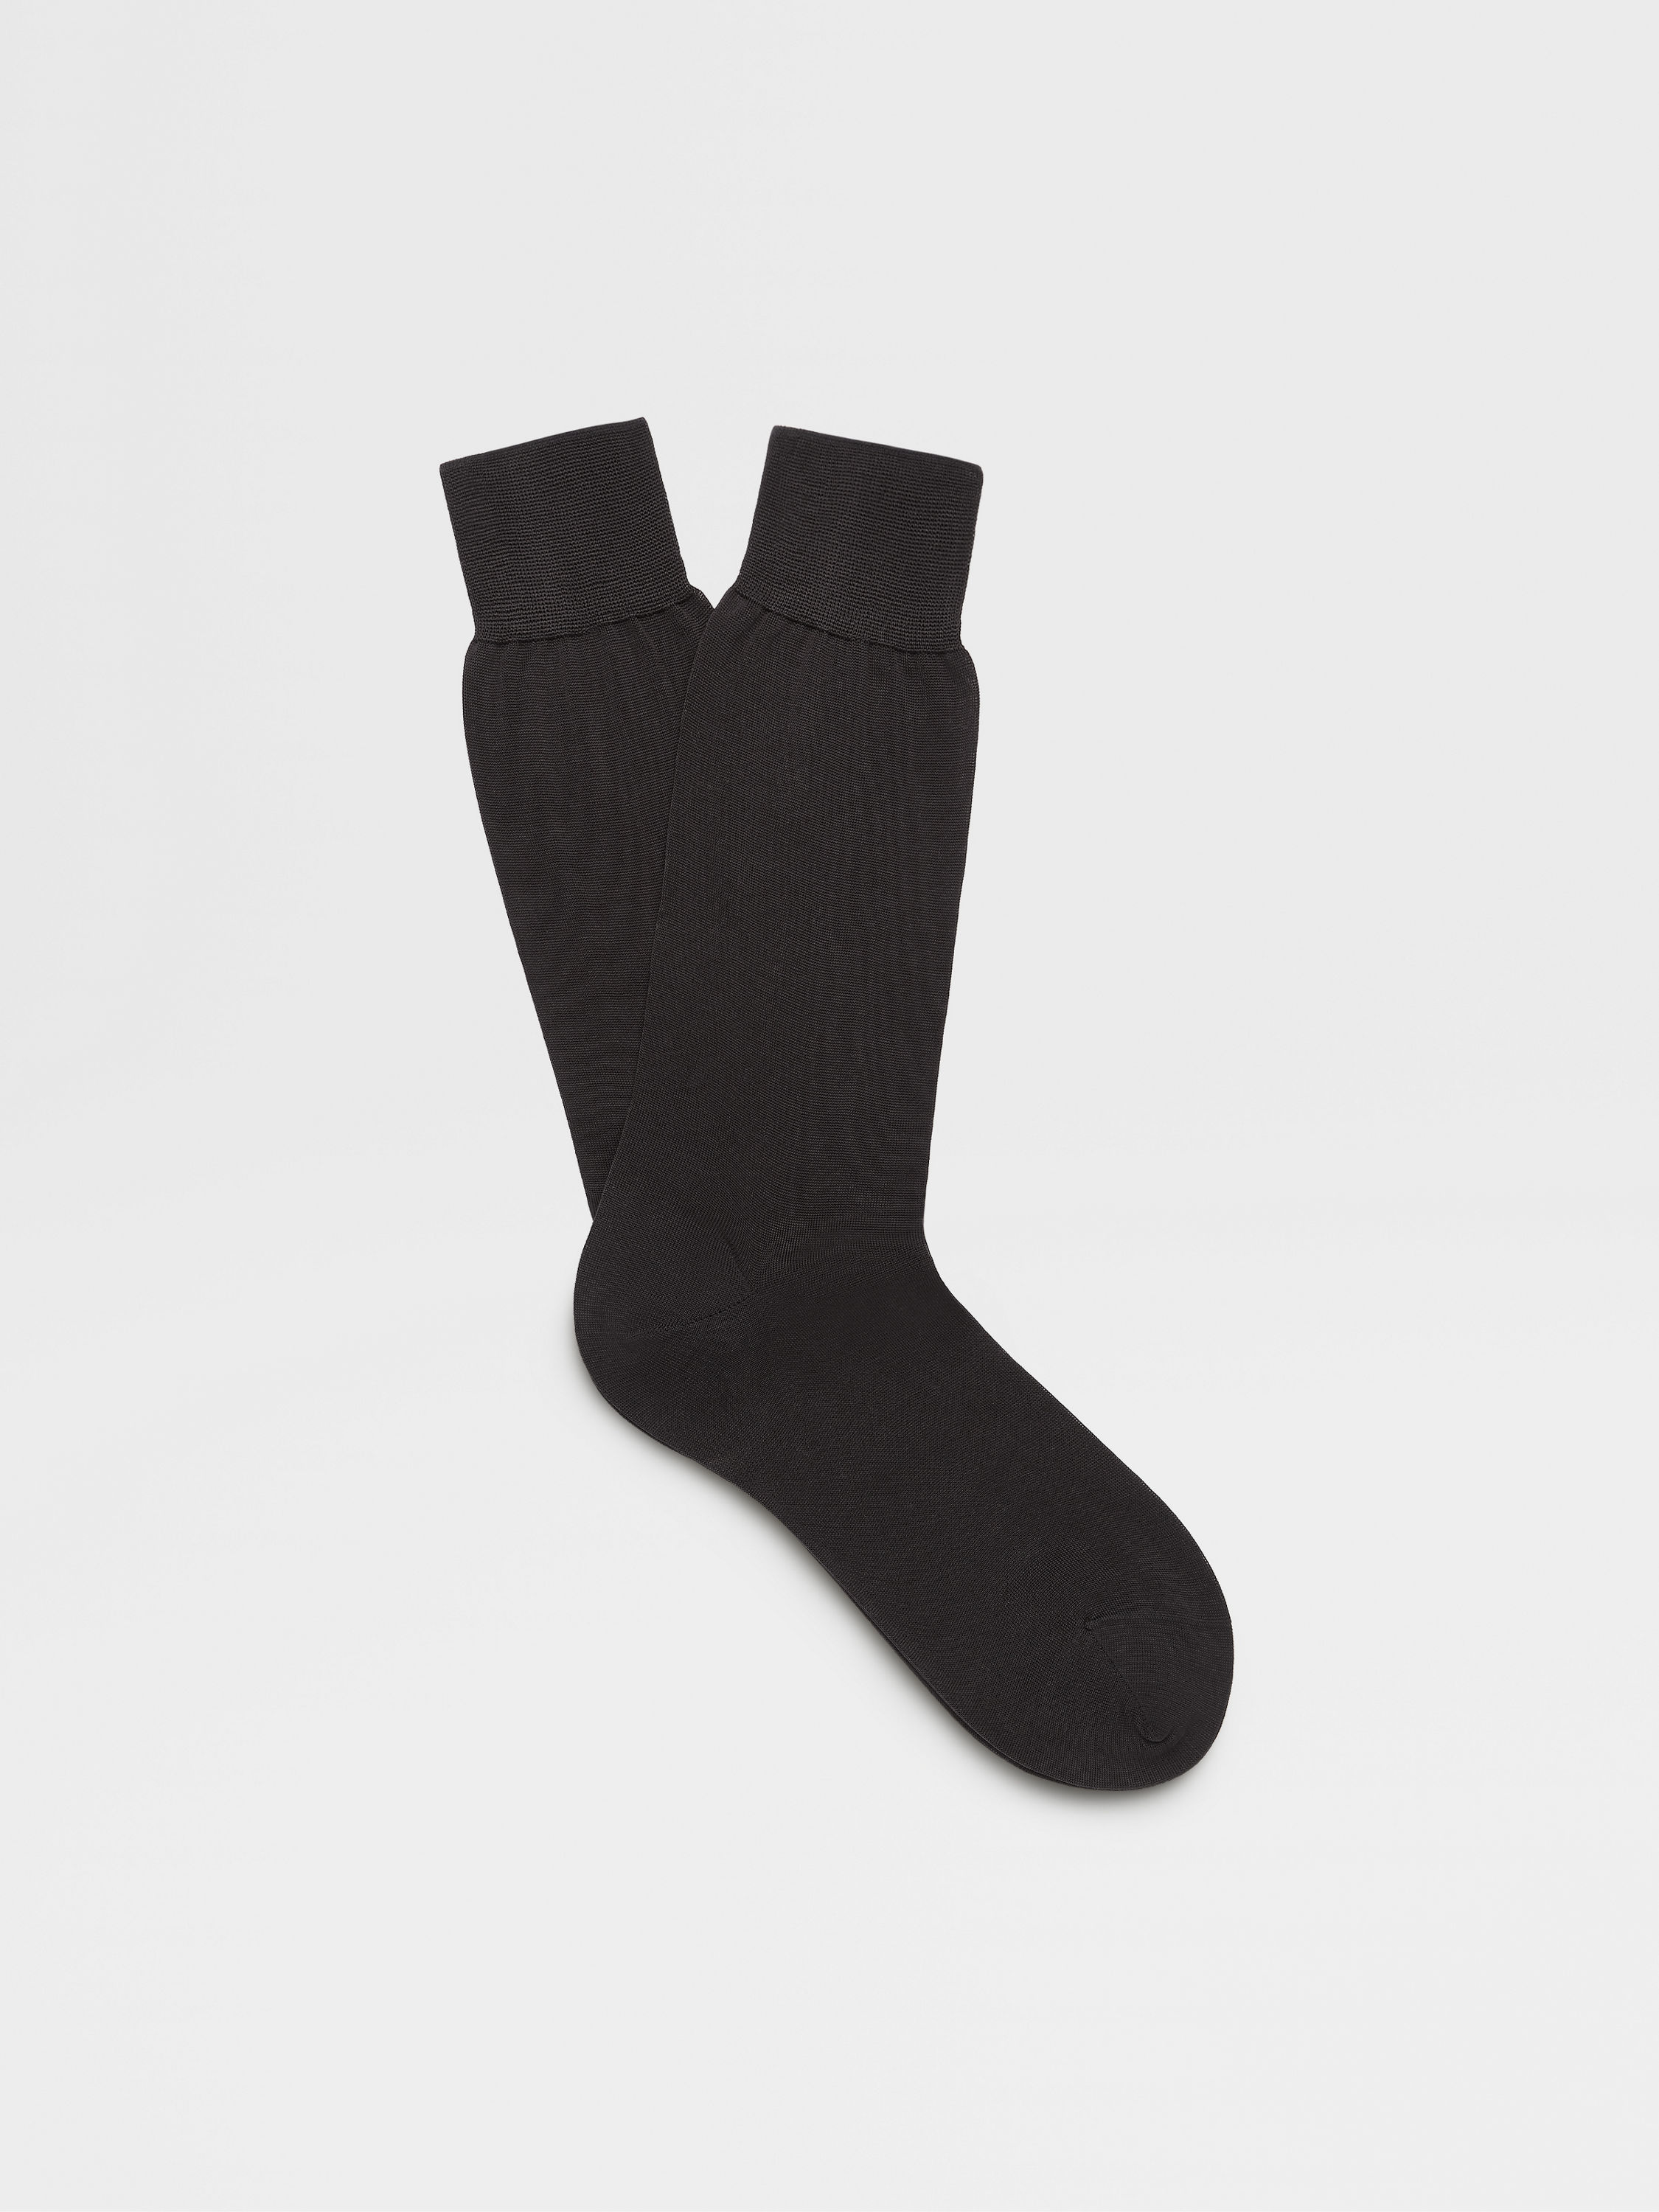 Black Cotton Socks